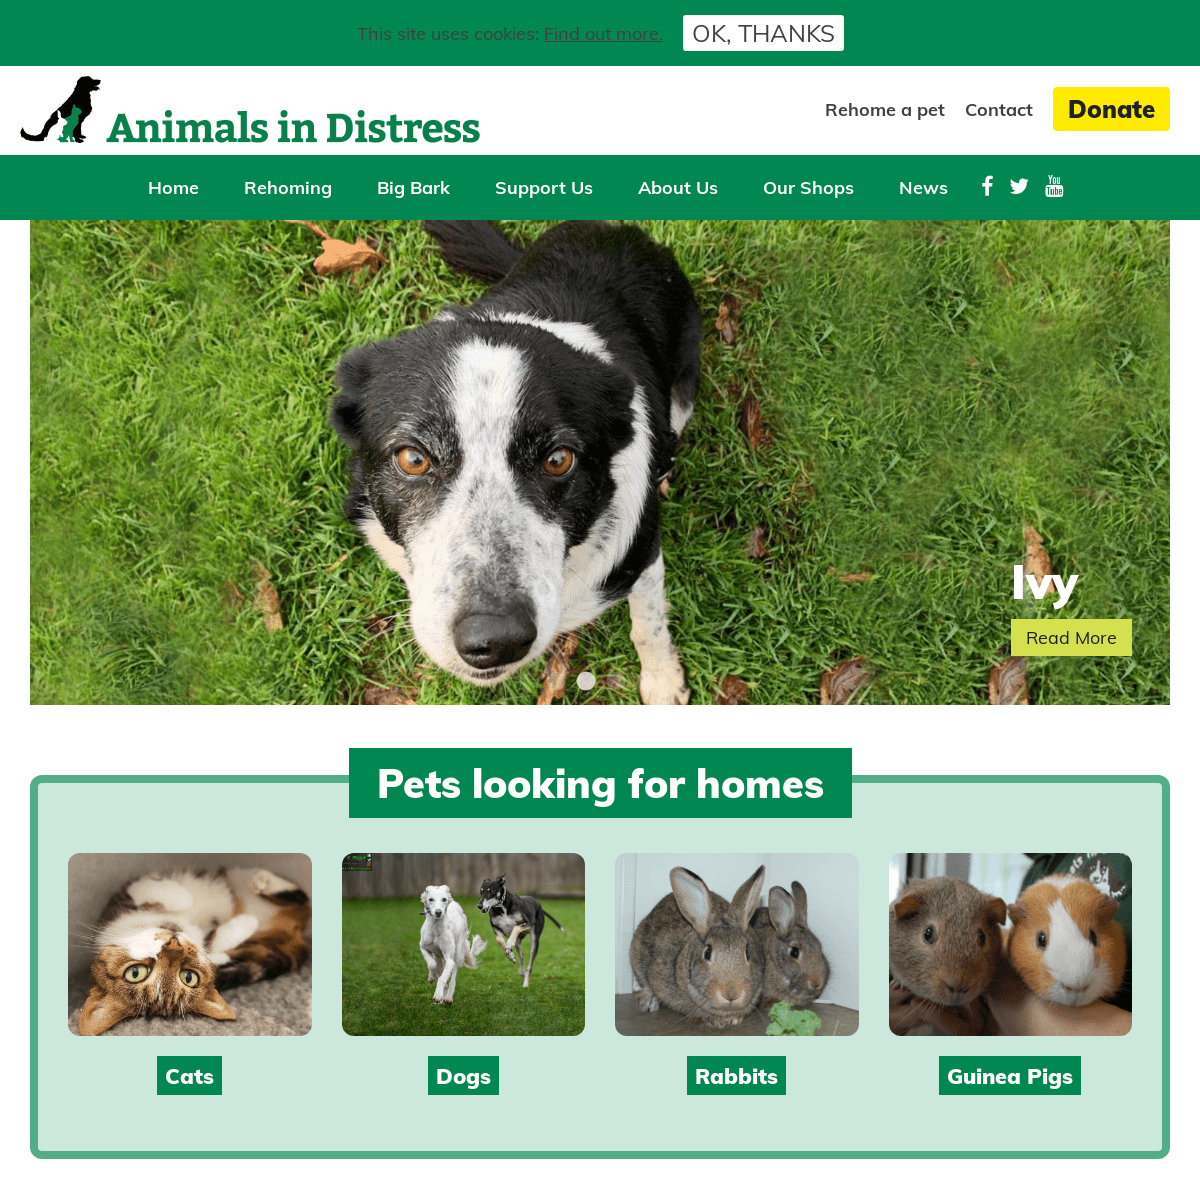 A complete backup of animalsindistress.uk.com